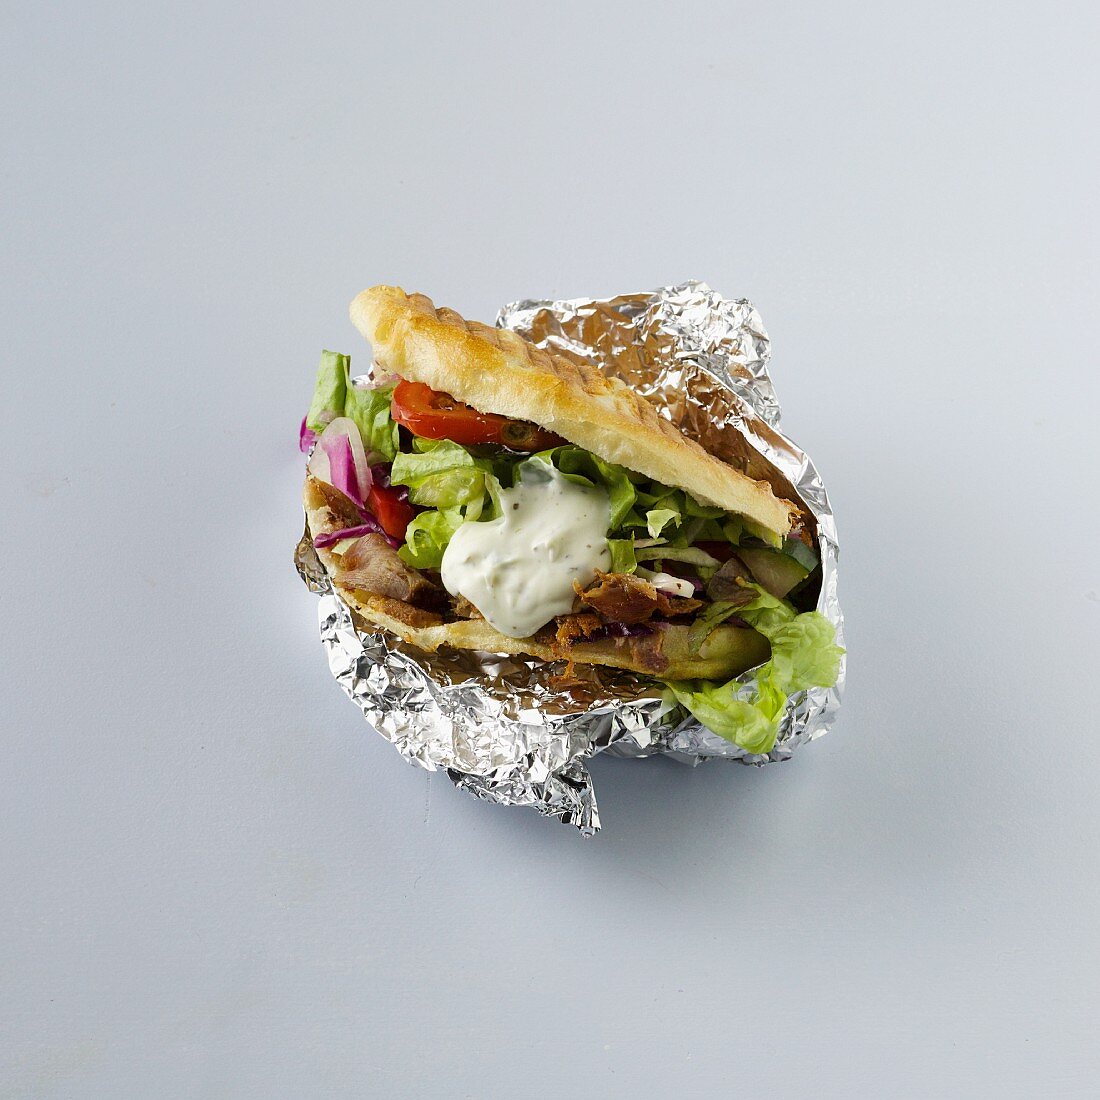 A donner kebab in tin foil